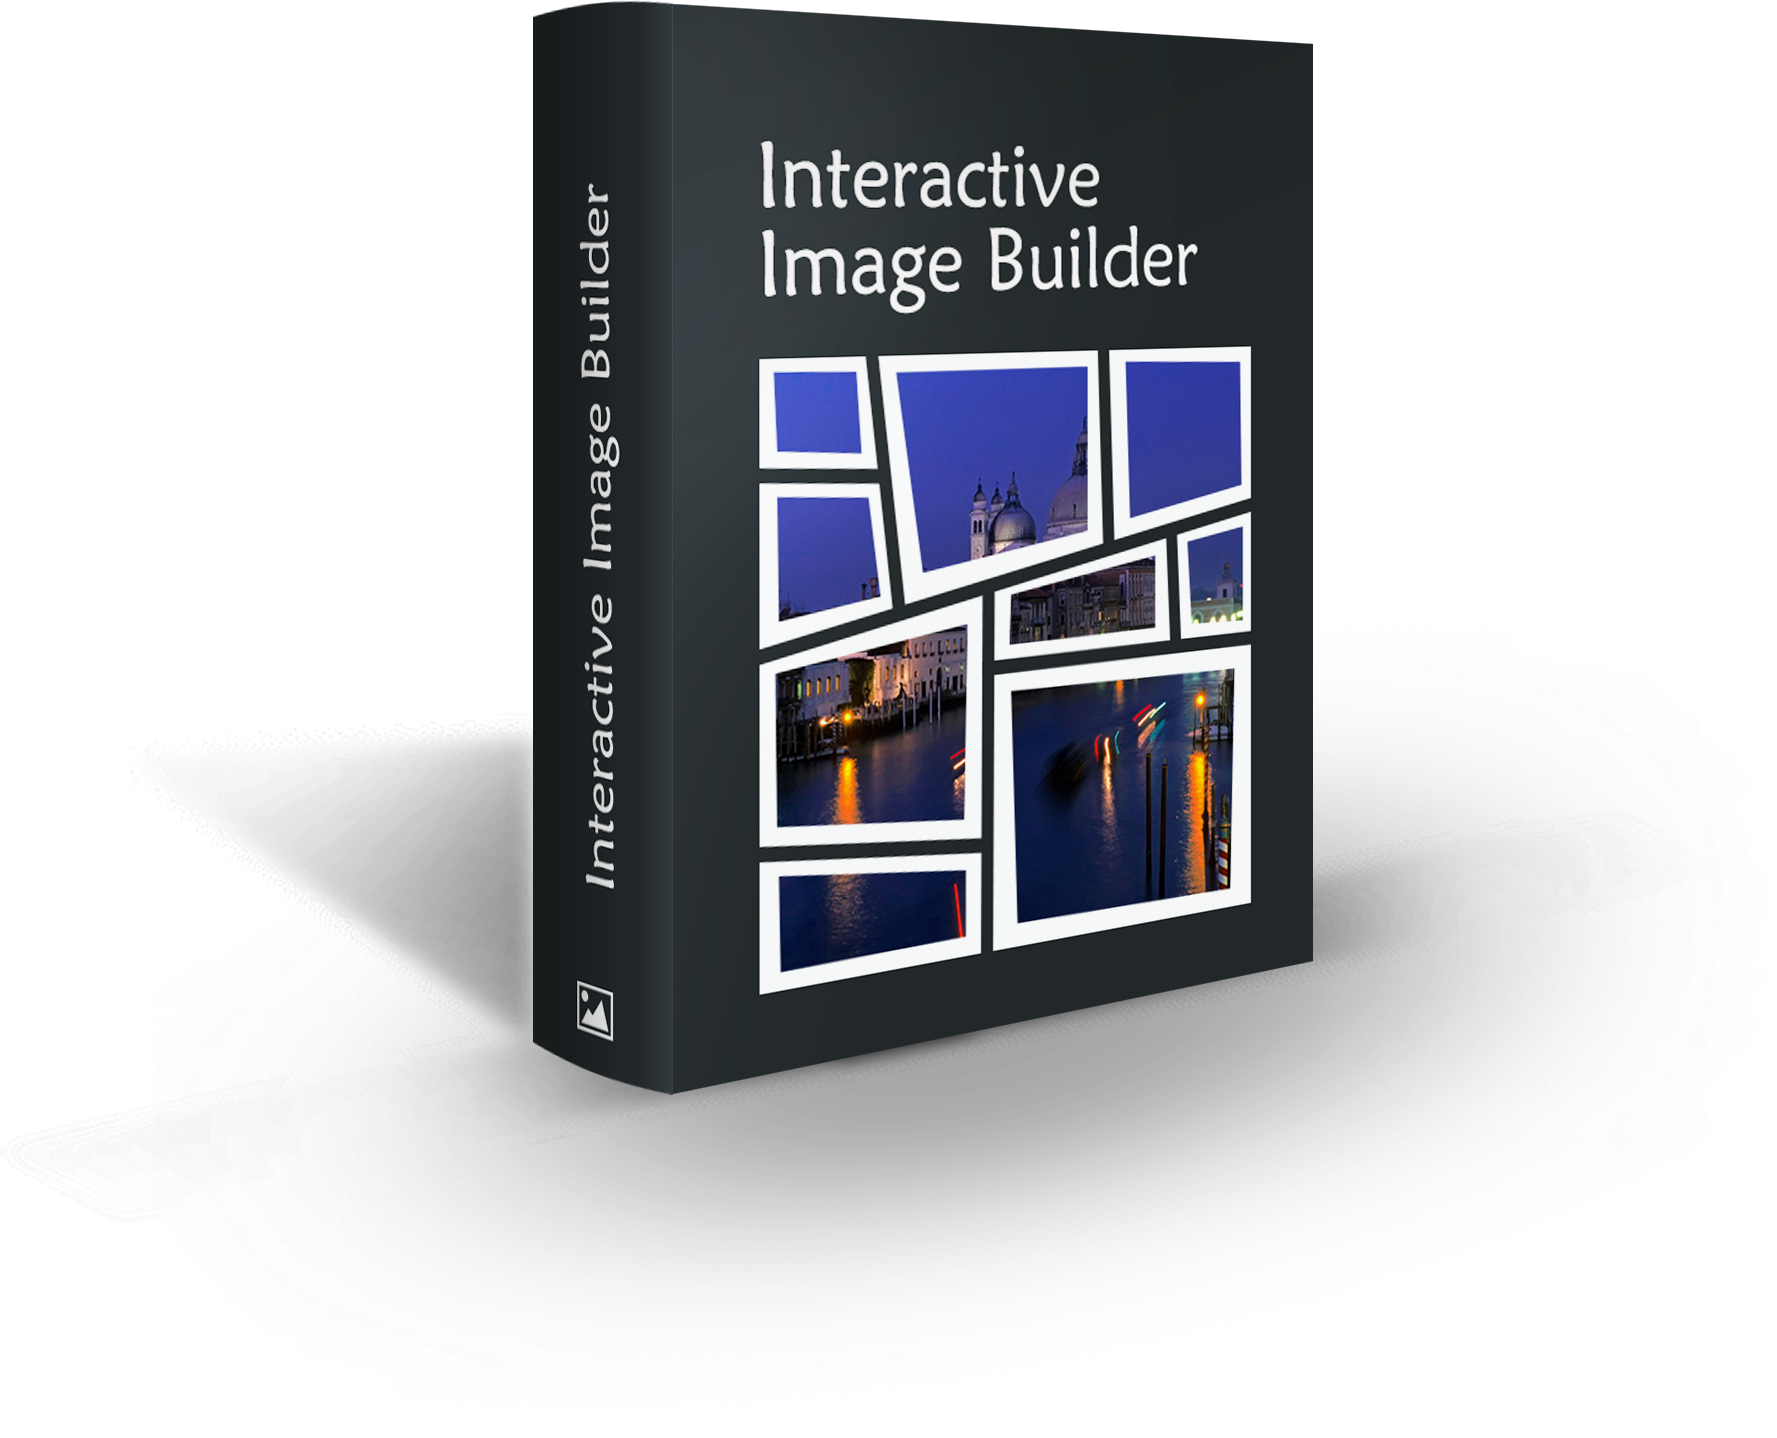 Interactive Image Builder